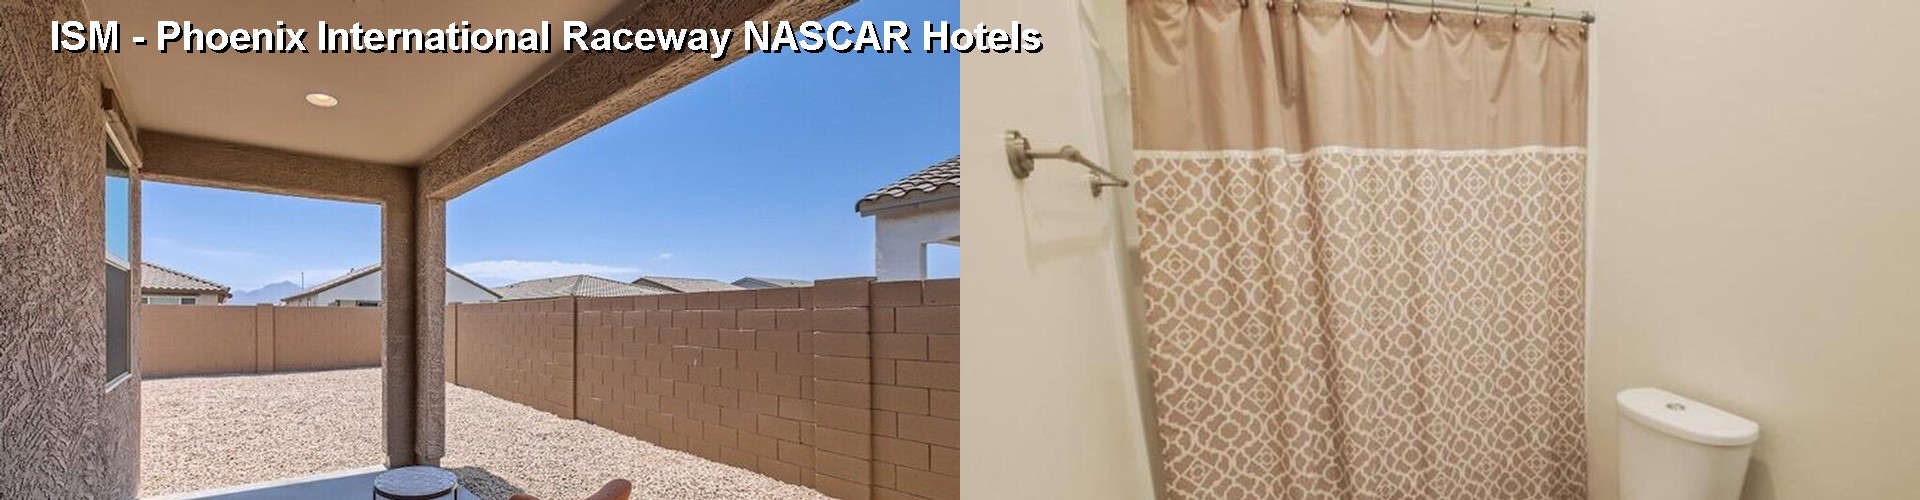 5 Best Hotels near ISM - Phoenix International Raceway NASCAR